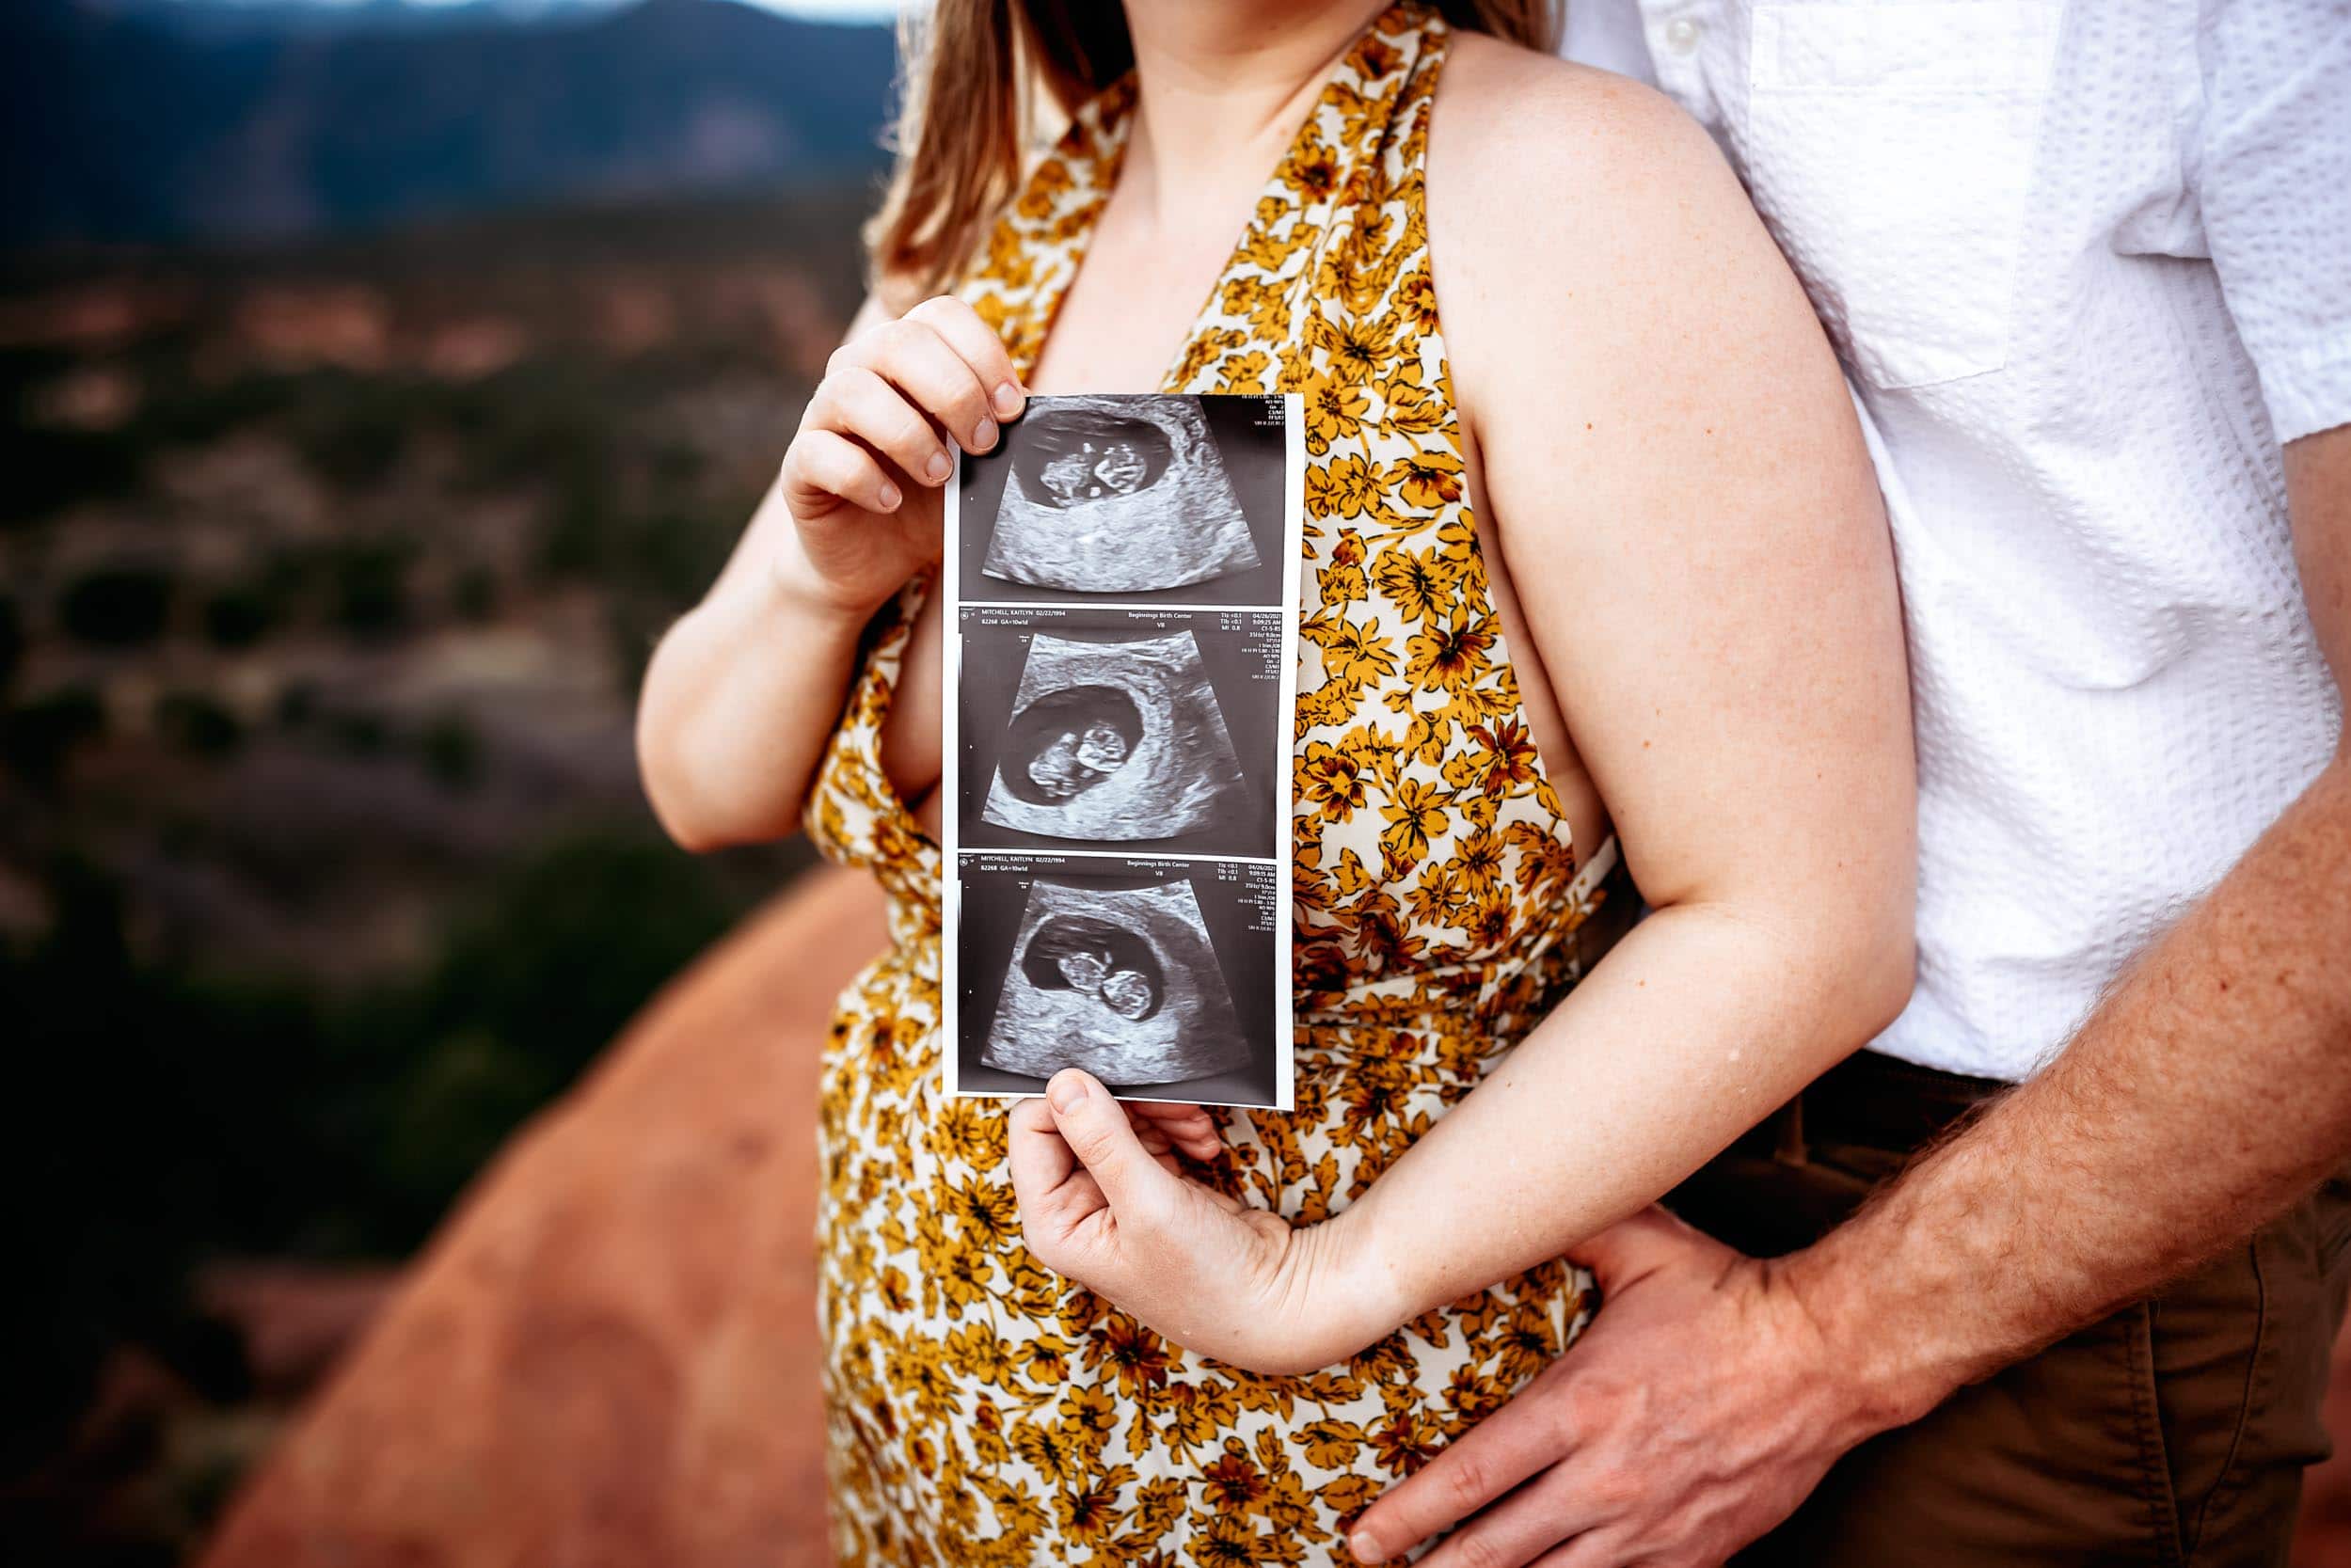 Ultrasound couples photo shoot